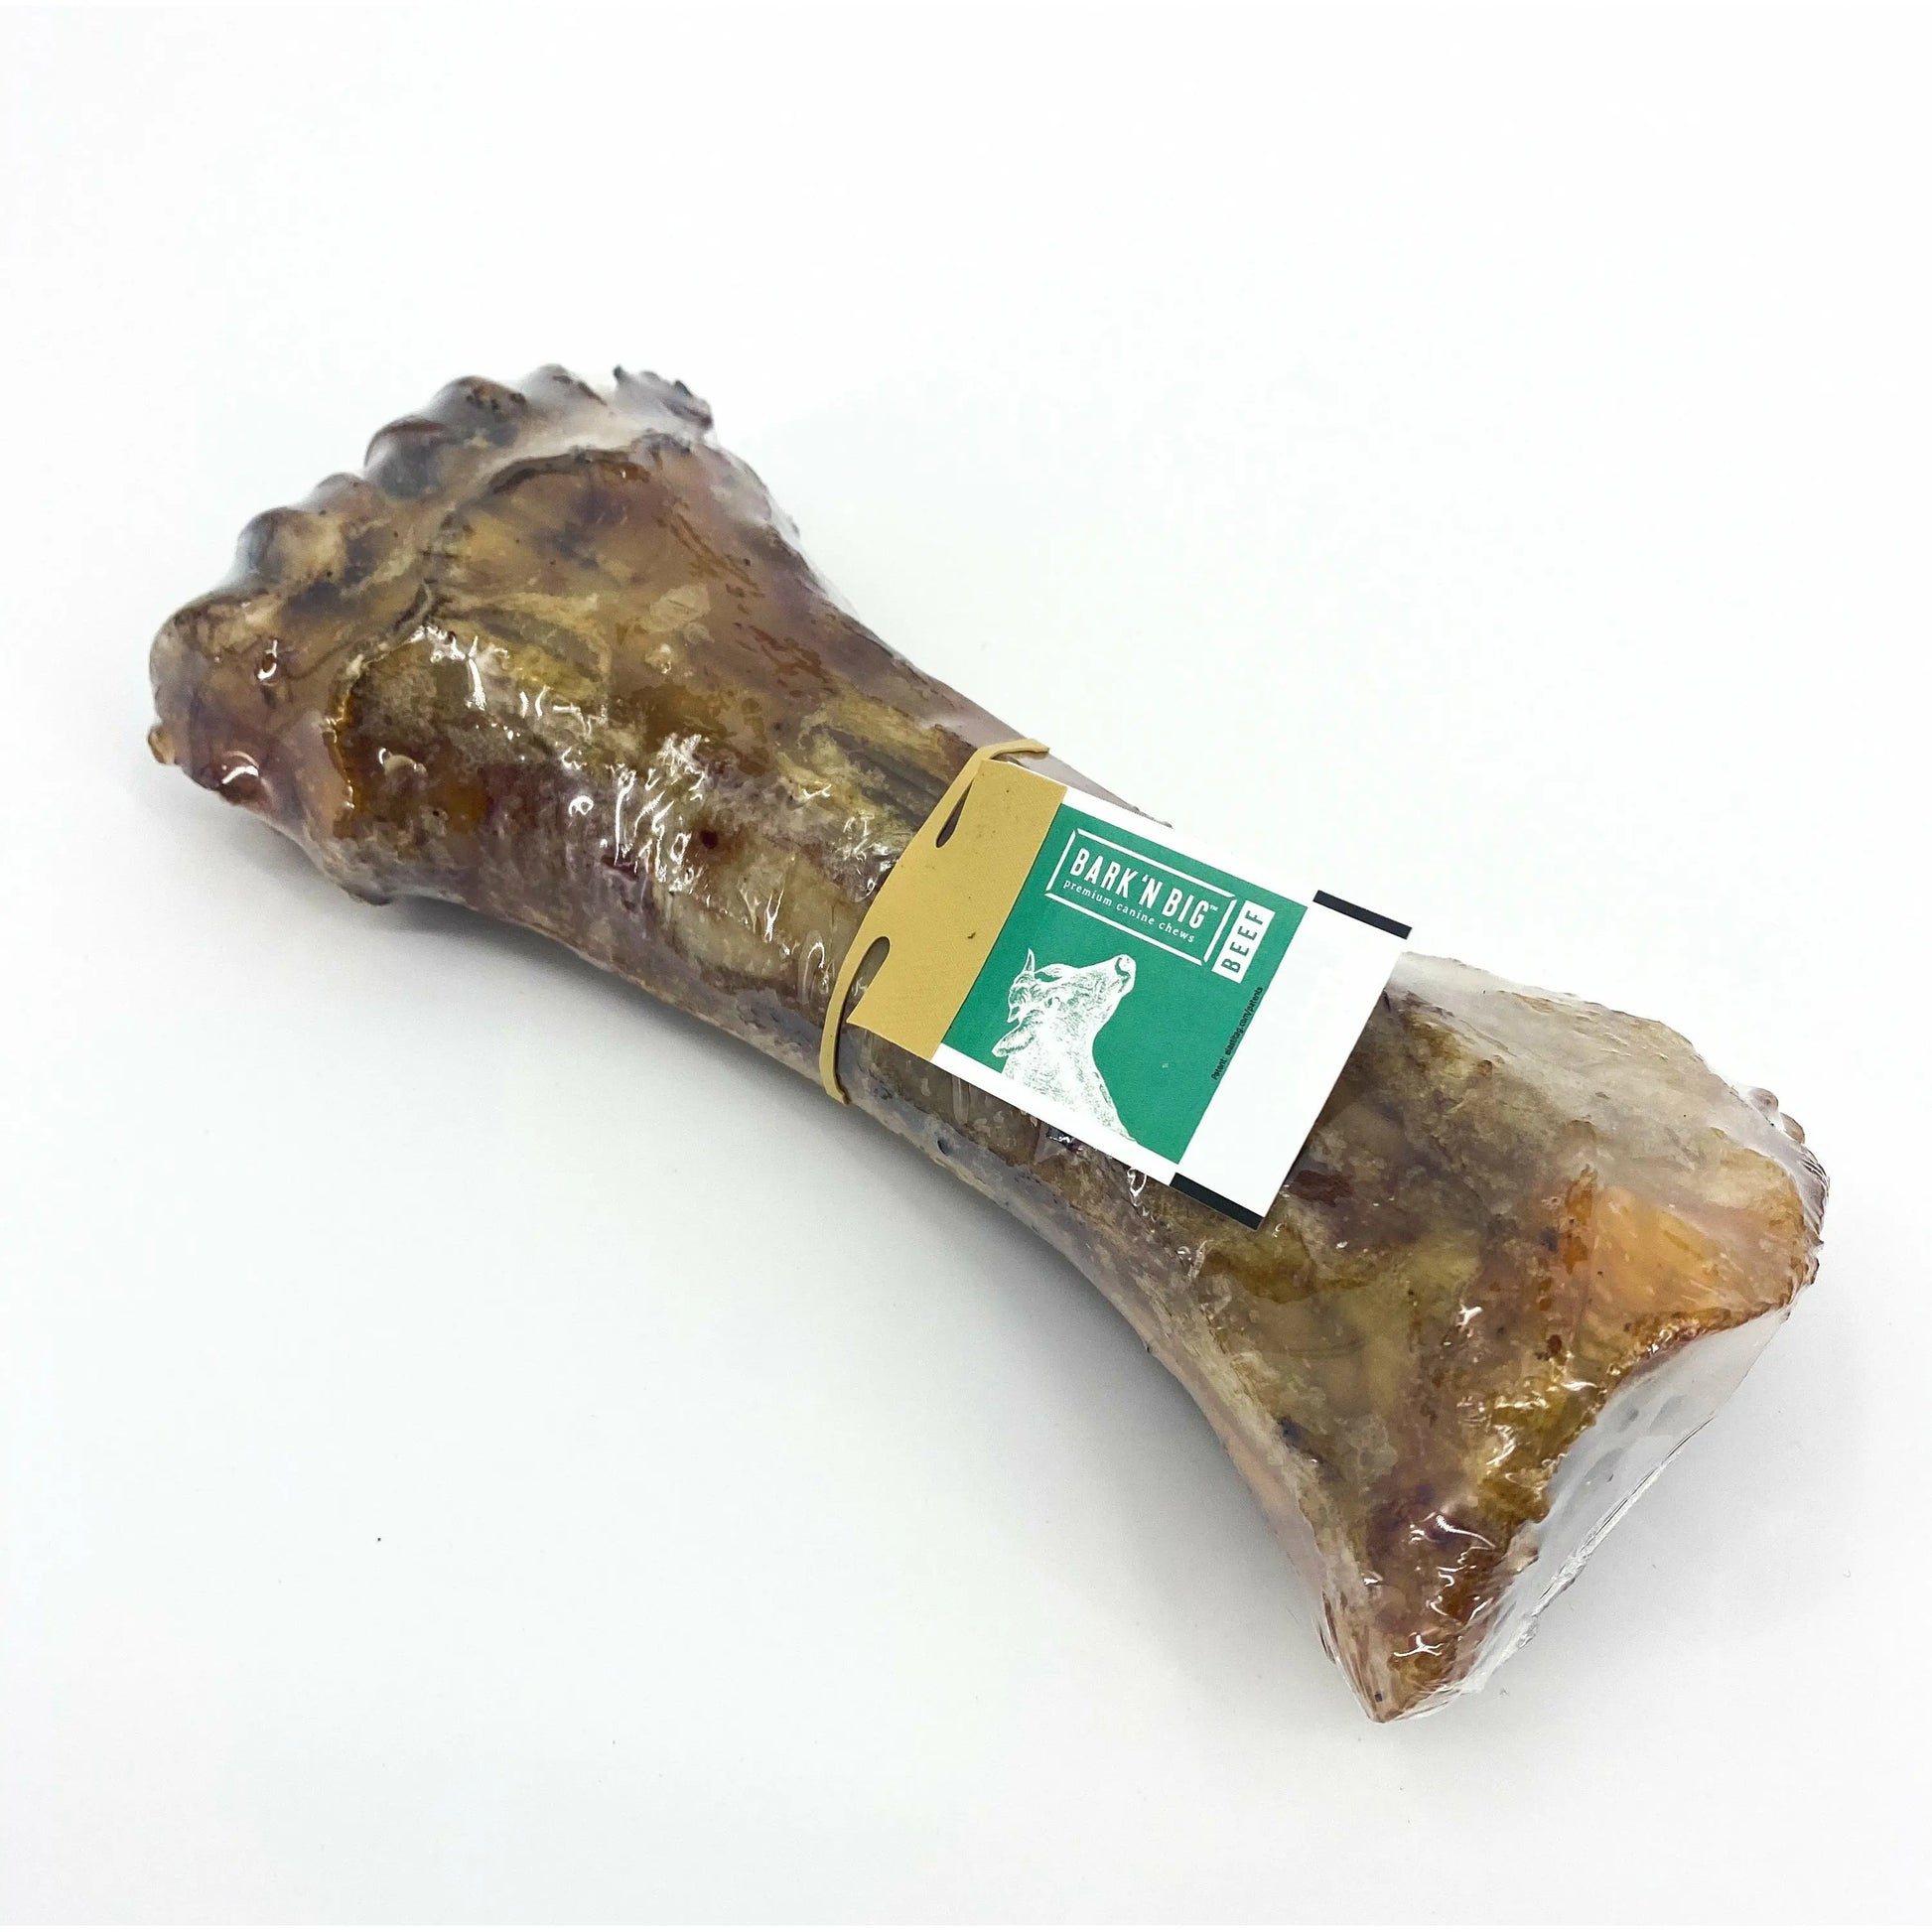 BarknBig Beef Shin Bone Long Lasting All Natural Gourmet & Healthy Dog Bone Treat Chews BarknBig